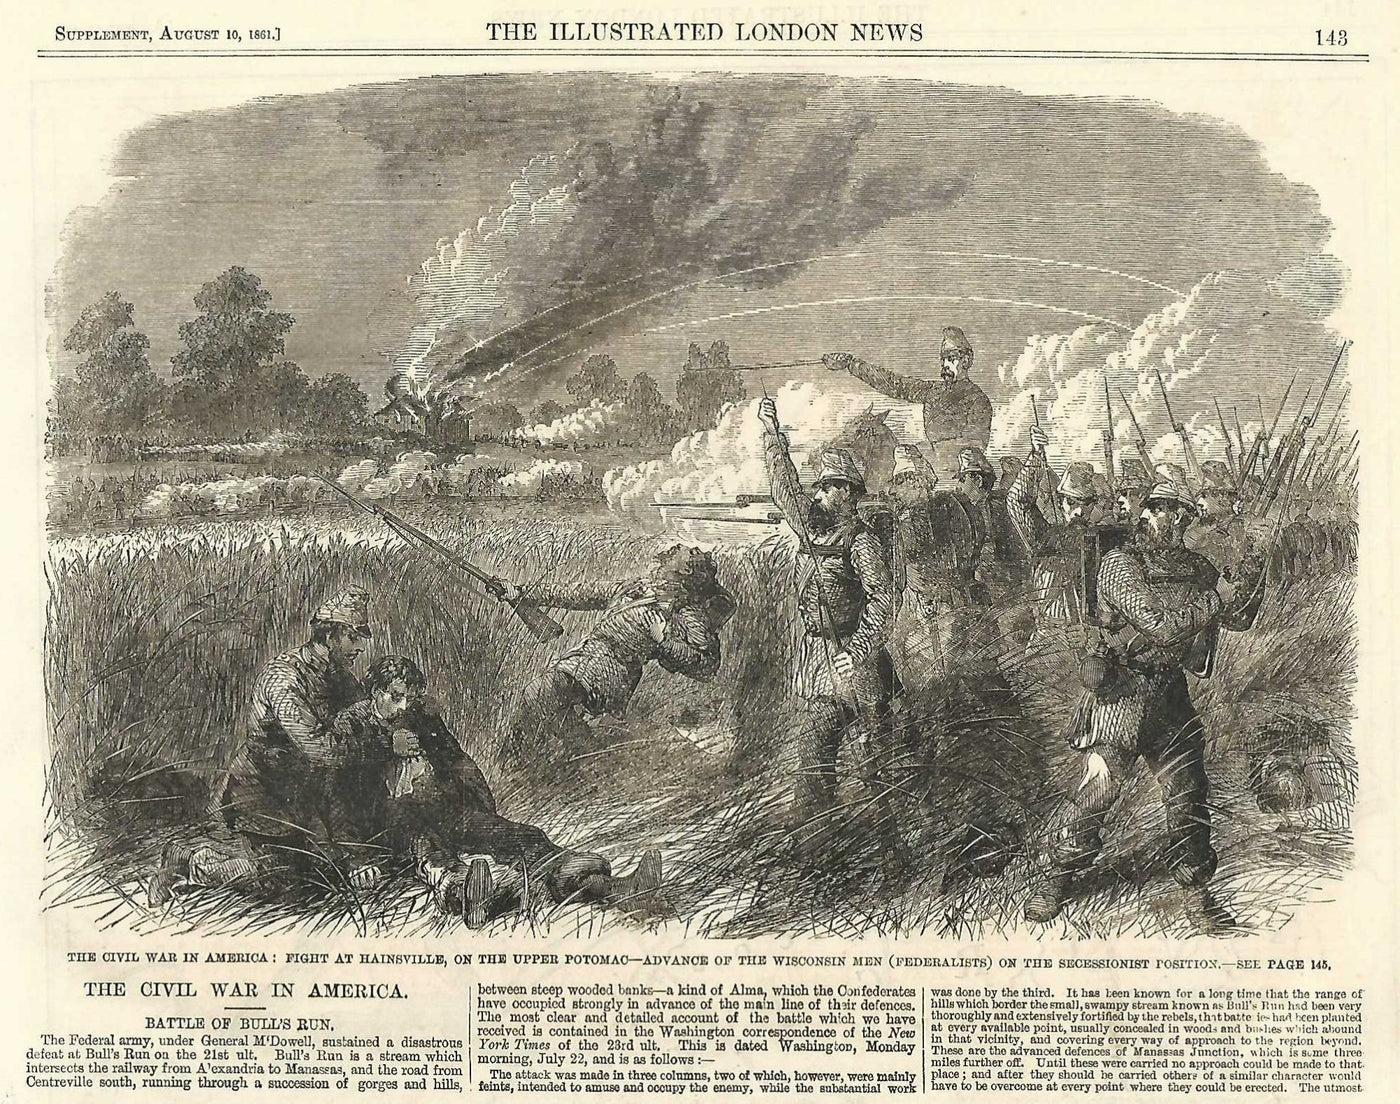 Bull Run Wisconsin Federal Troops attack Confederates antique print 1861